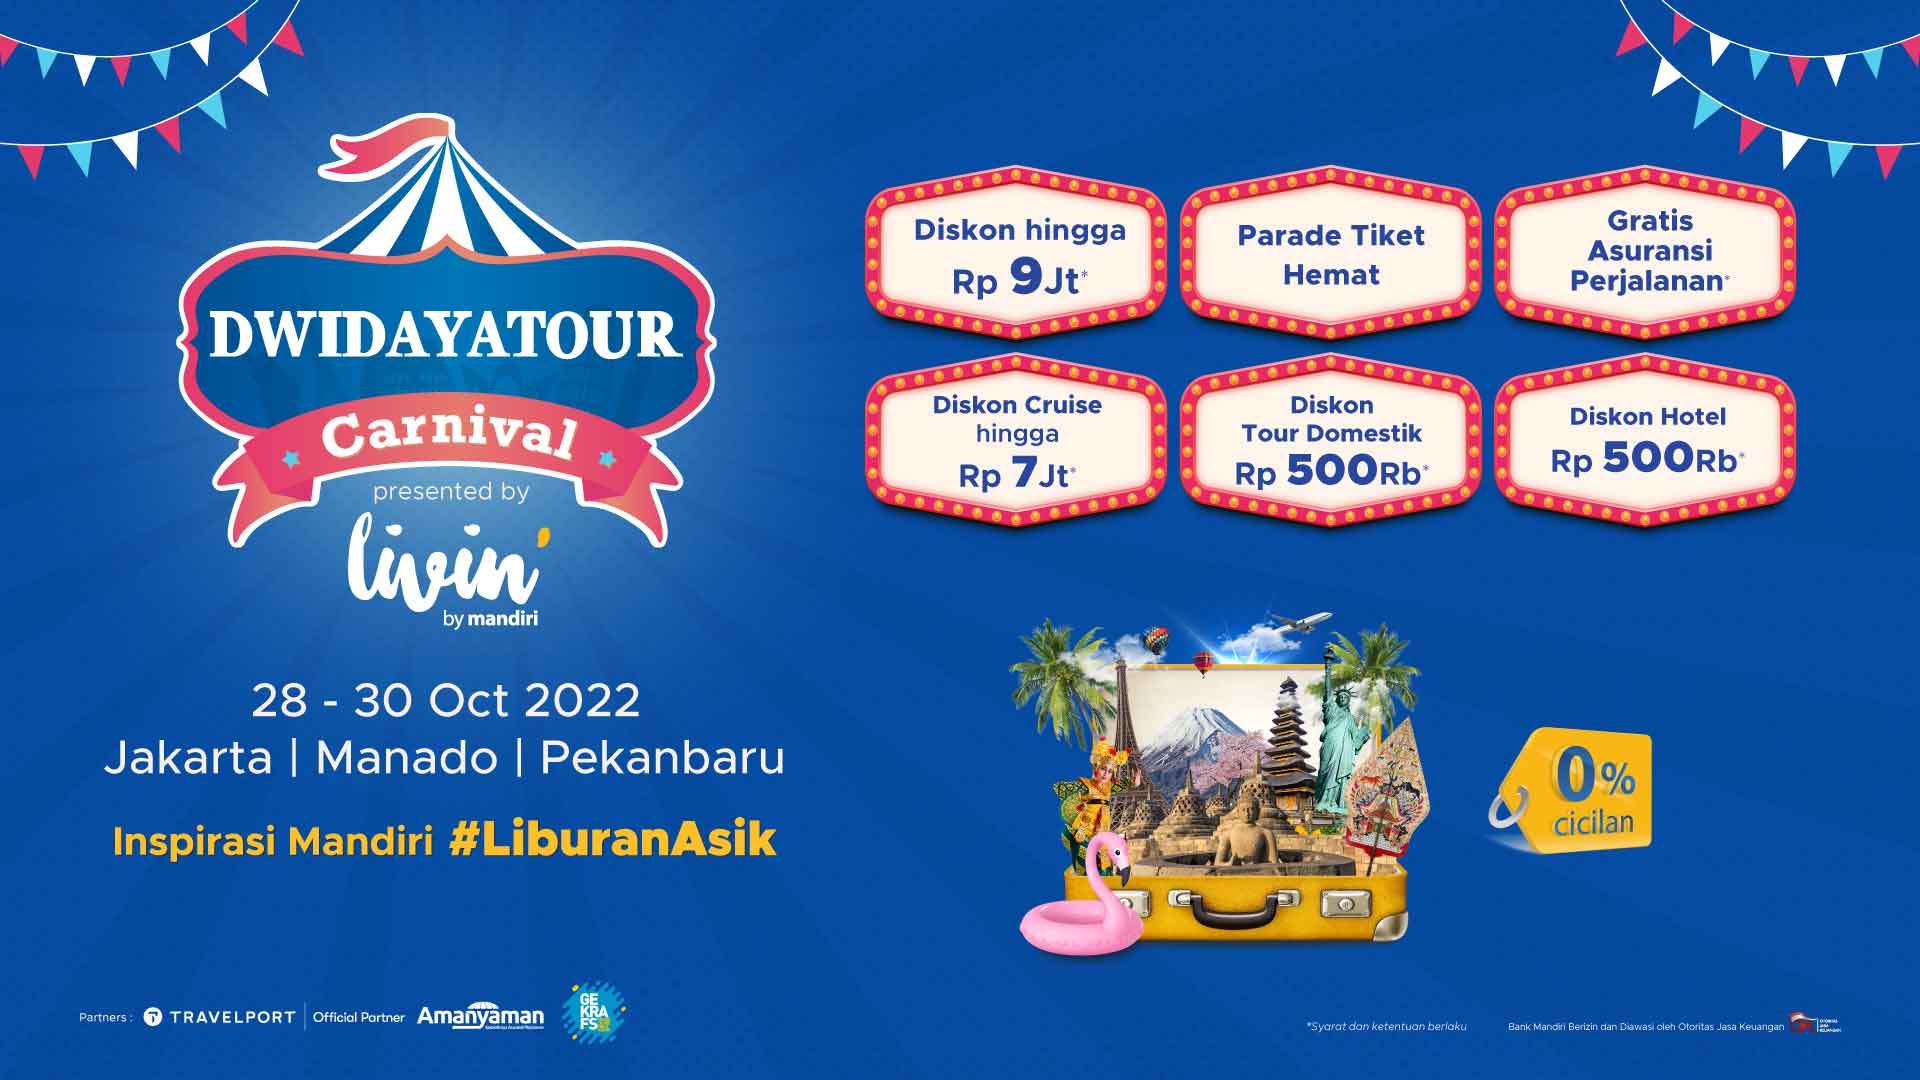 Carnival Jakarta Pekanbaru Manado 28-30 Oktober 2022